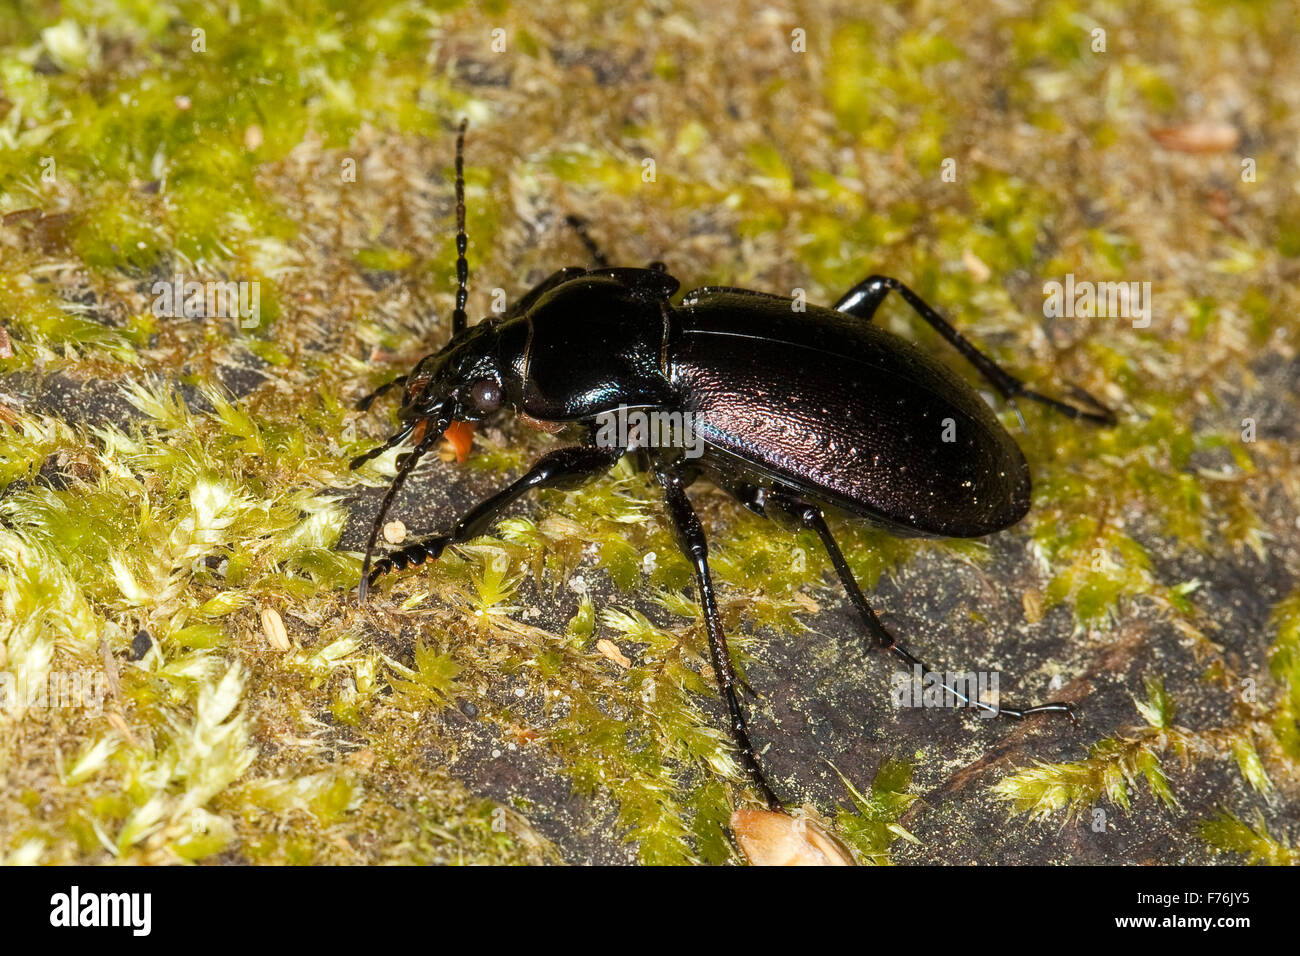 Forest ground beetle, Hain-Laufkäfer, Hainlaufkäfer, Laufkäfer, Carabus nemoralis, Le carabe des bois Stock Photo